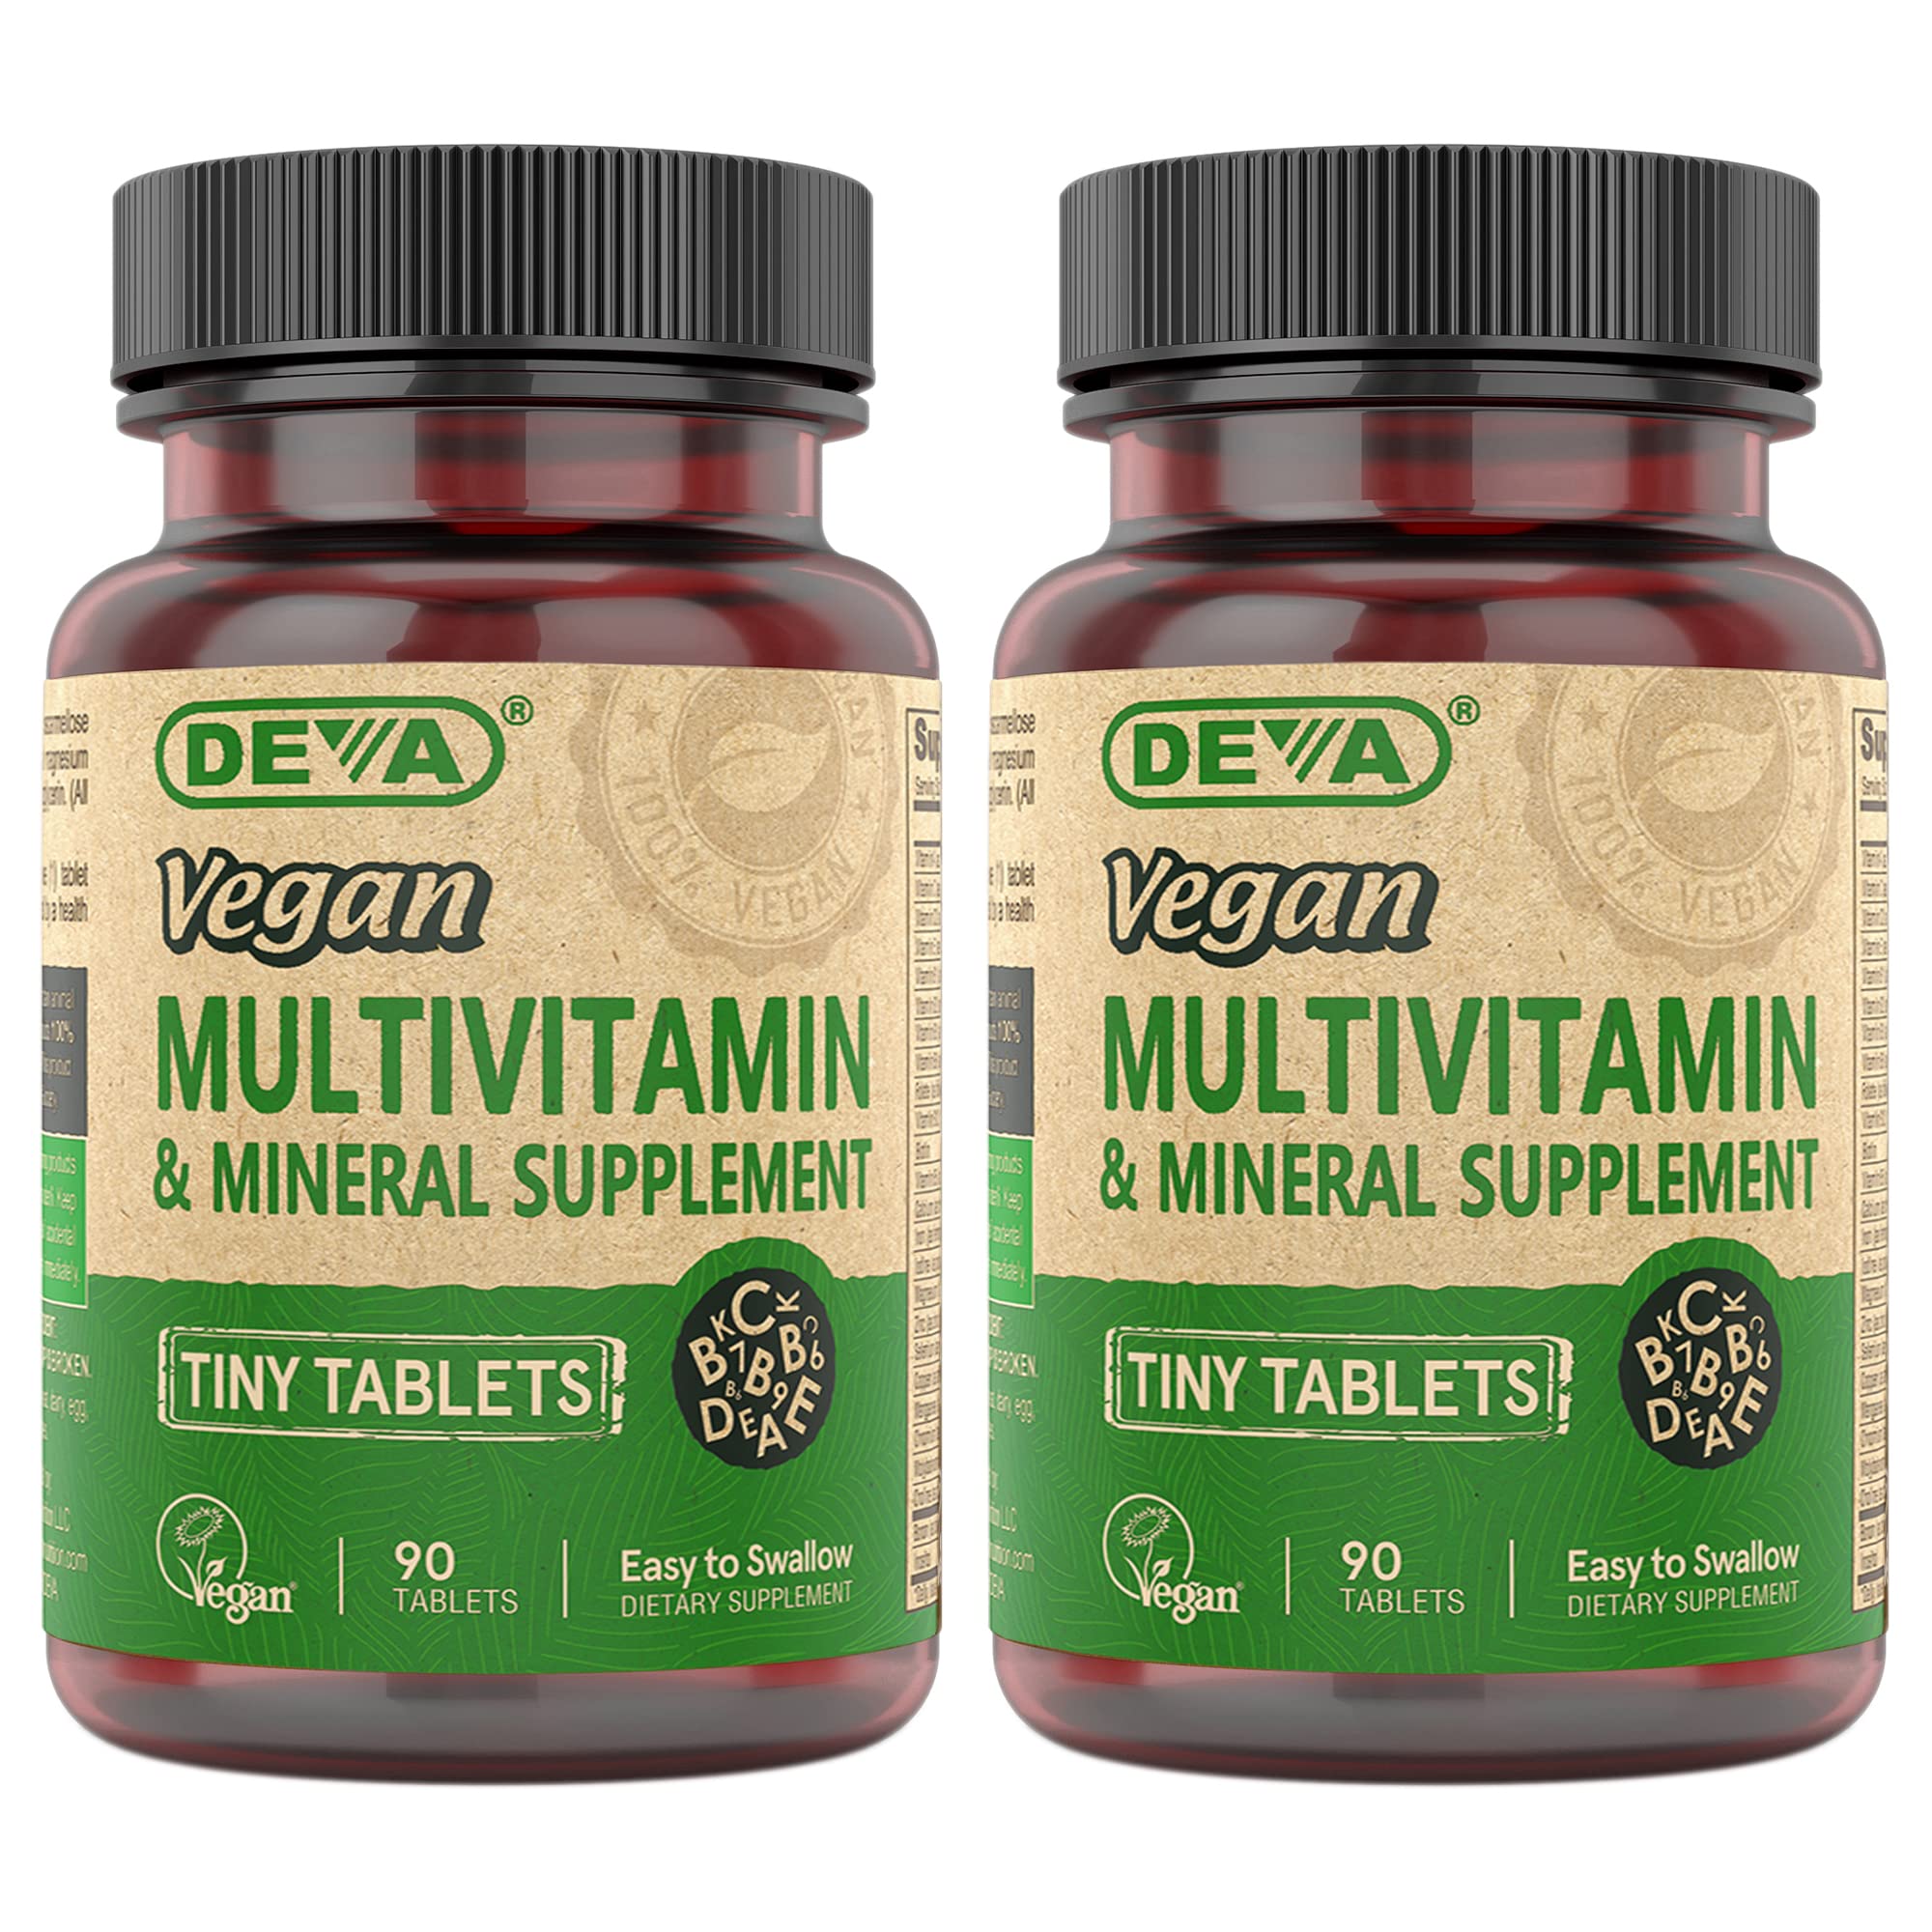 DEVA Tiny Tablets Vegan Multivitamins for Women & Men, Multivitamin with Iron, Mineral Supplement, Vitamin C, Vitamin B Complex, Vitamin B12, Vitamin E, Zinc, Gluten Free, 90 Tablets (Pack of 2)